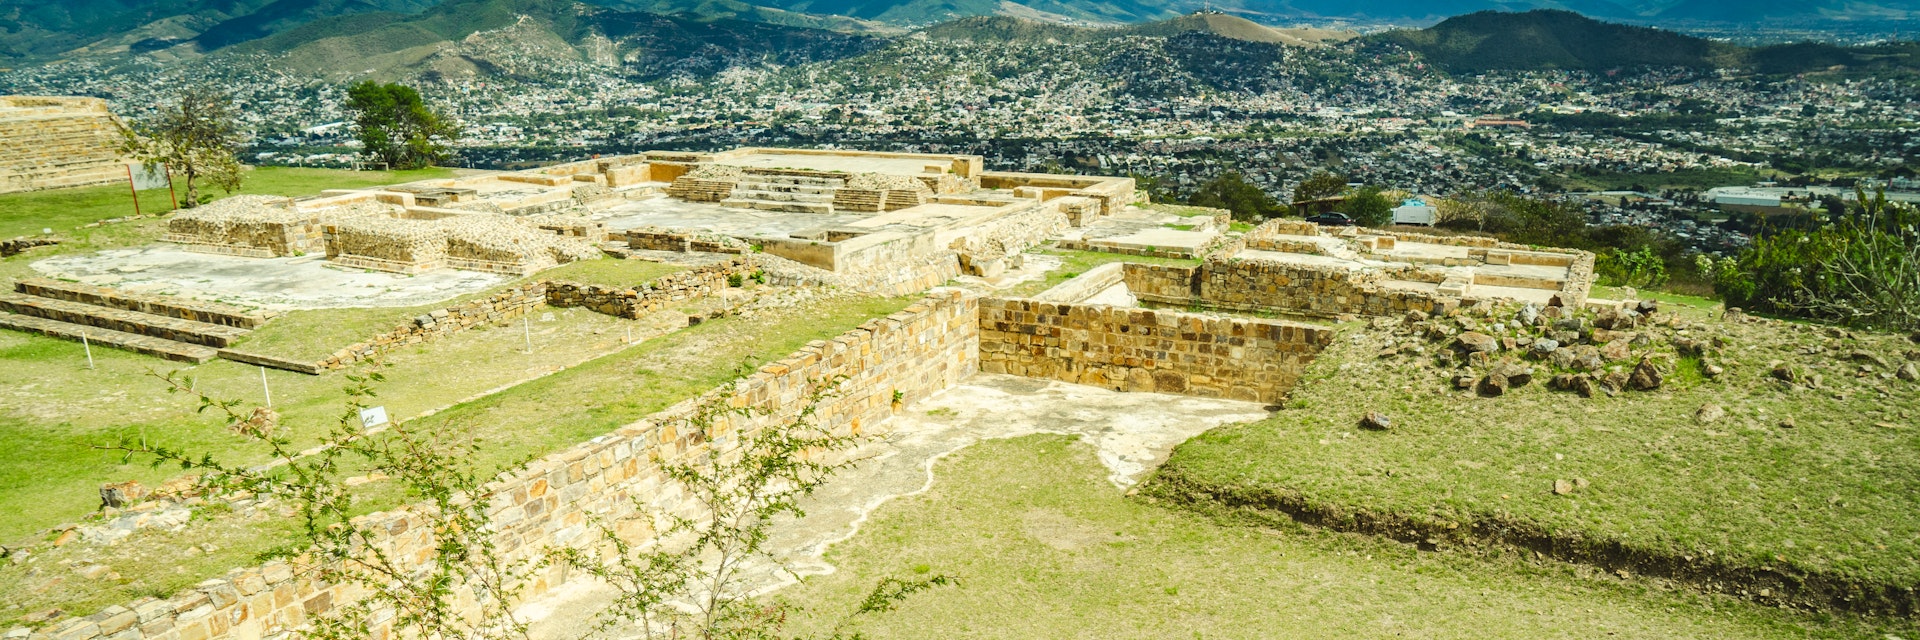 Atzompa ruins in Oaxaca, Mexico.